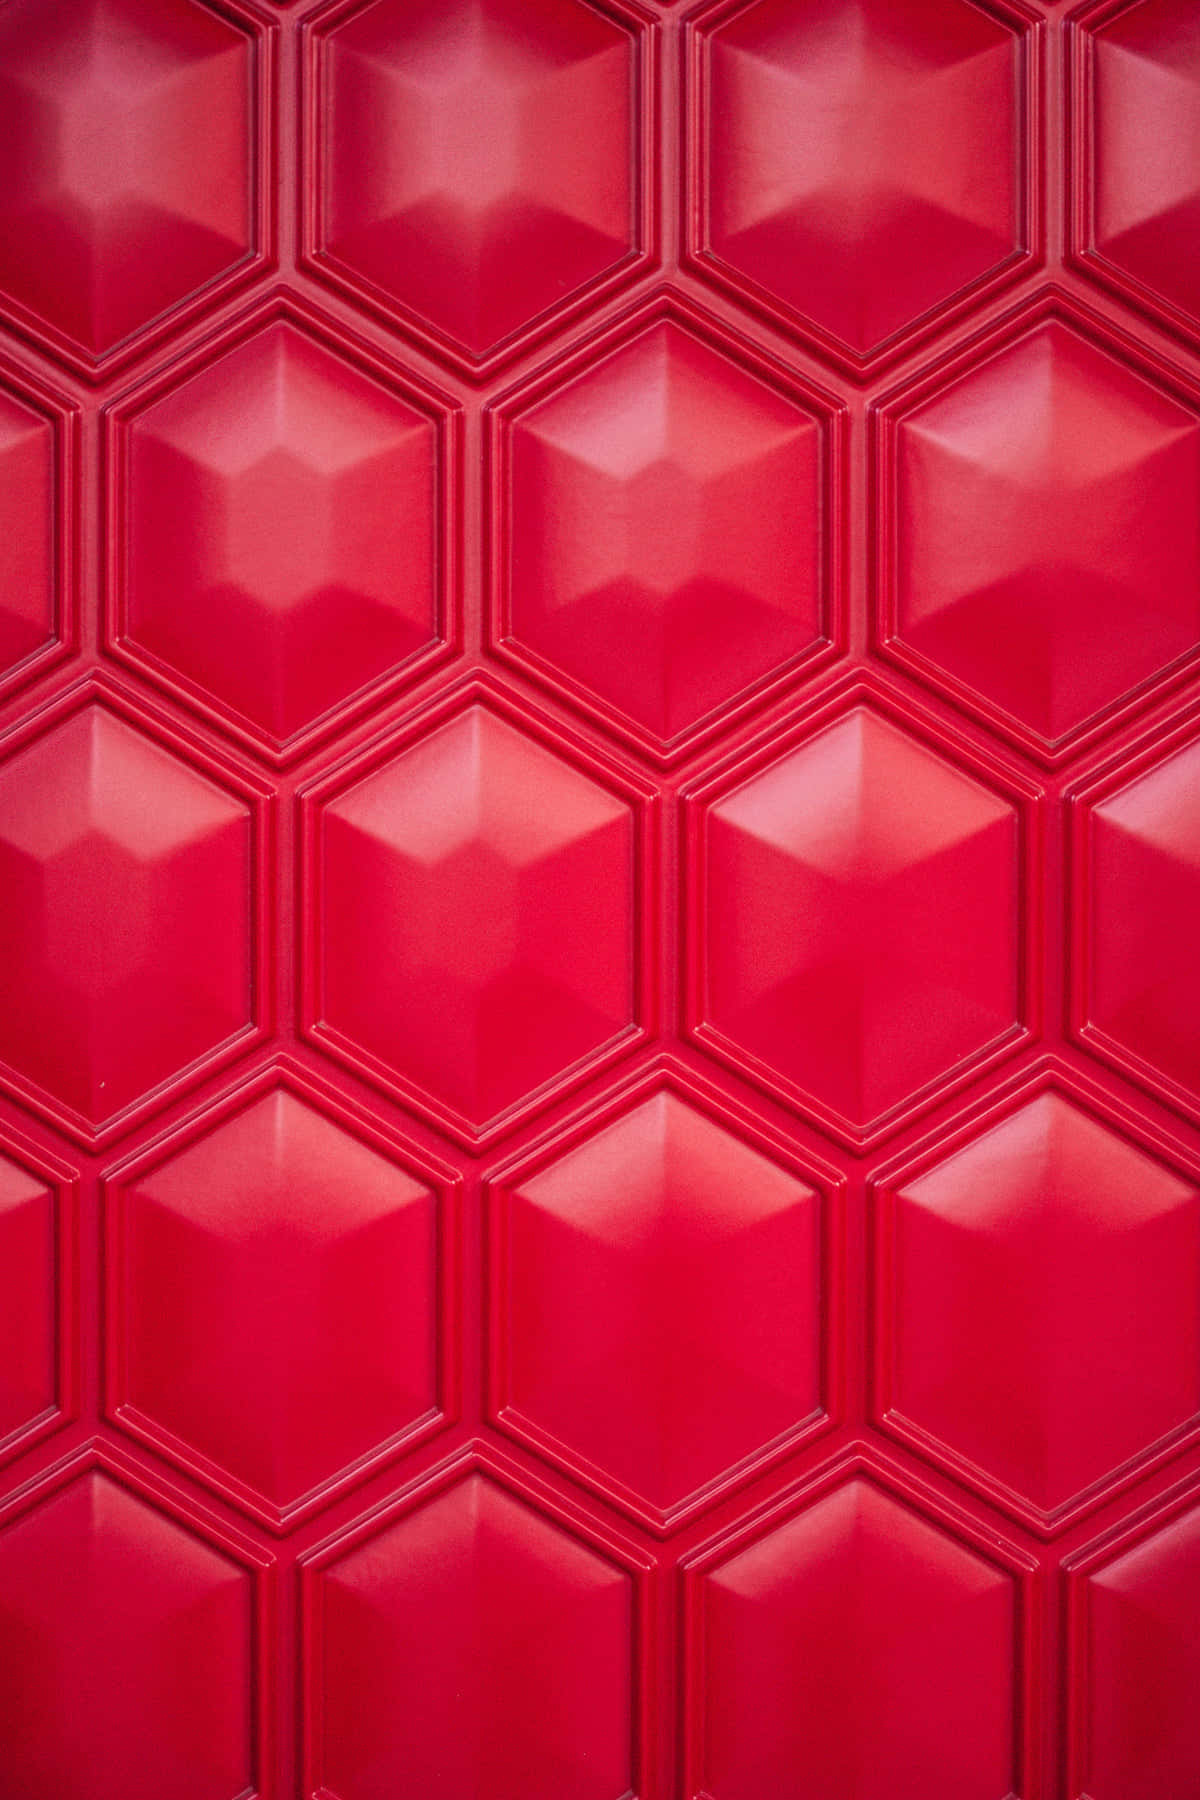 Roterhexagonaler Kachel-hintergrund Wallpaper